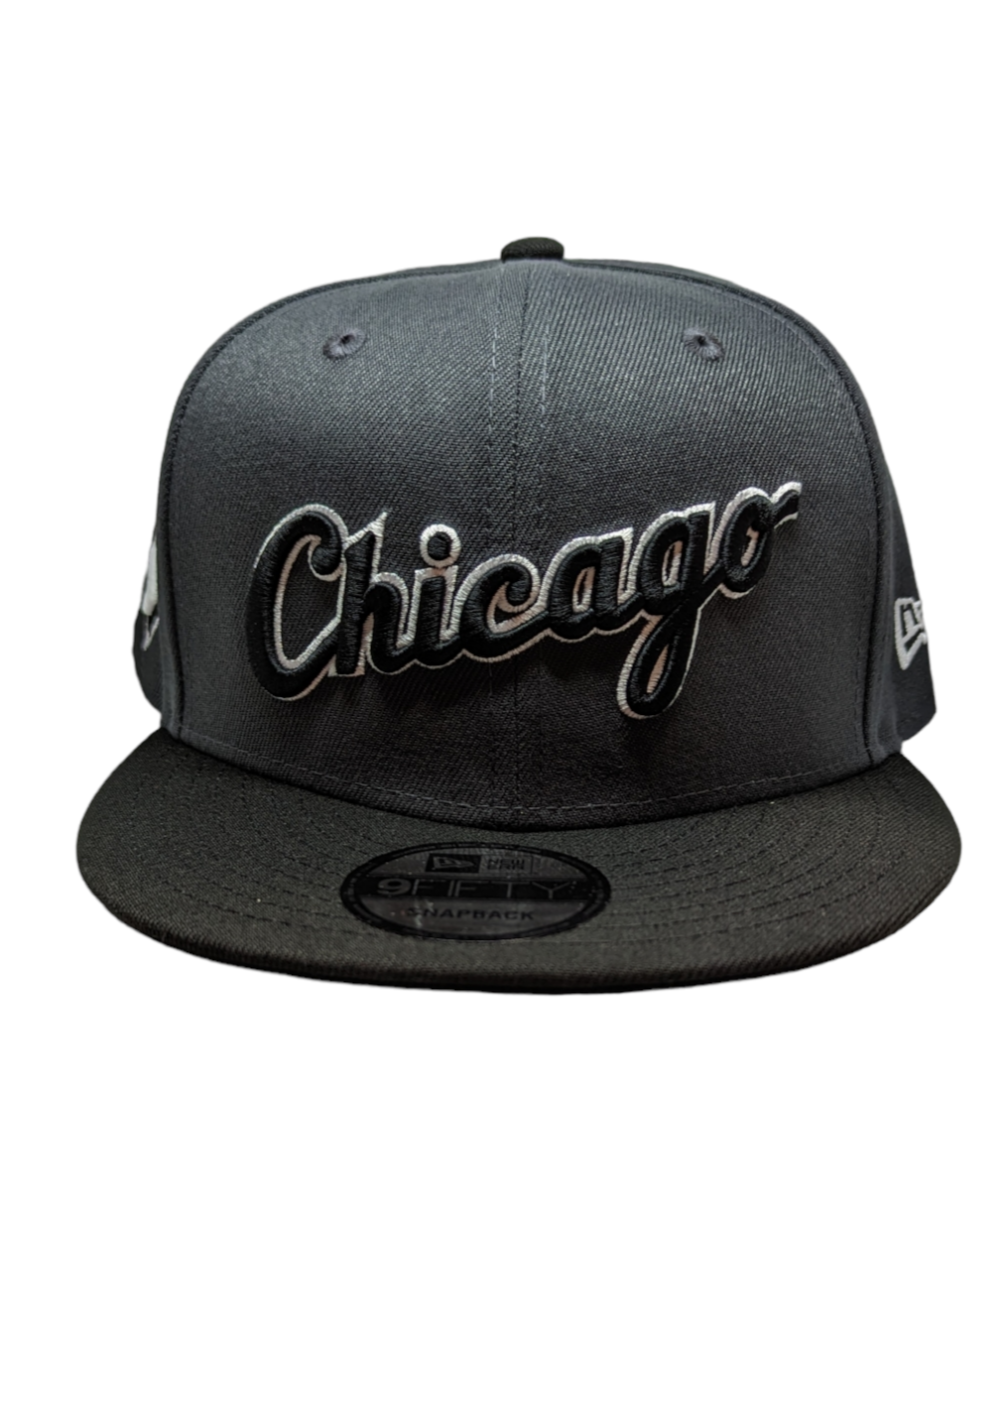 Chicago White Sox New Era 2 Tone Graphite/Black Script 9FIFTY Snapback Adjustable Hat